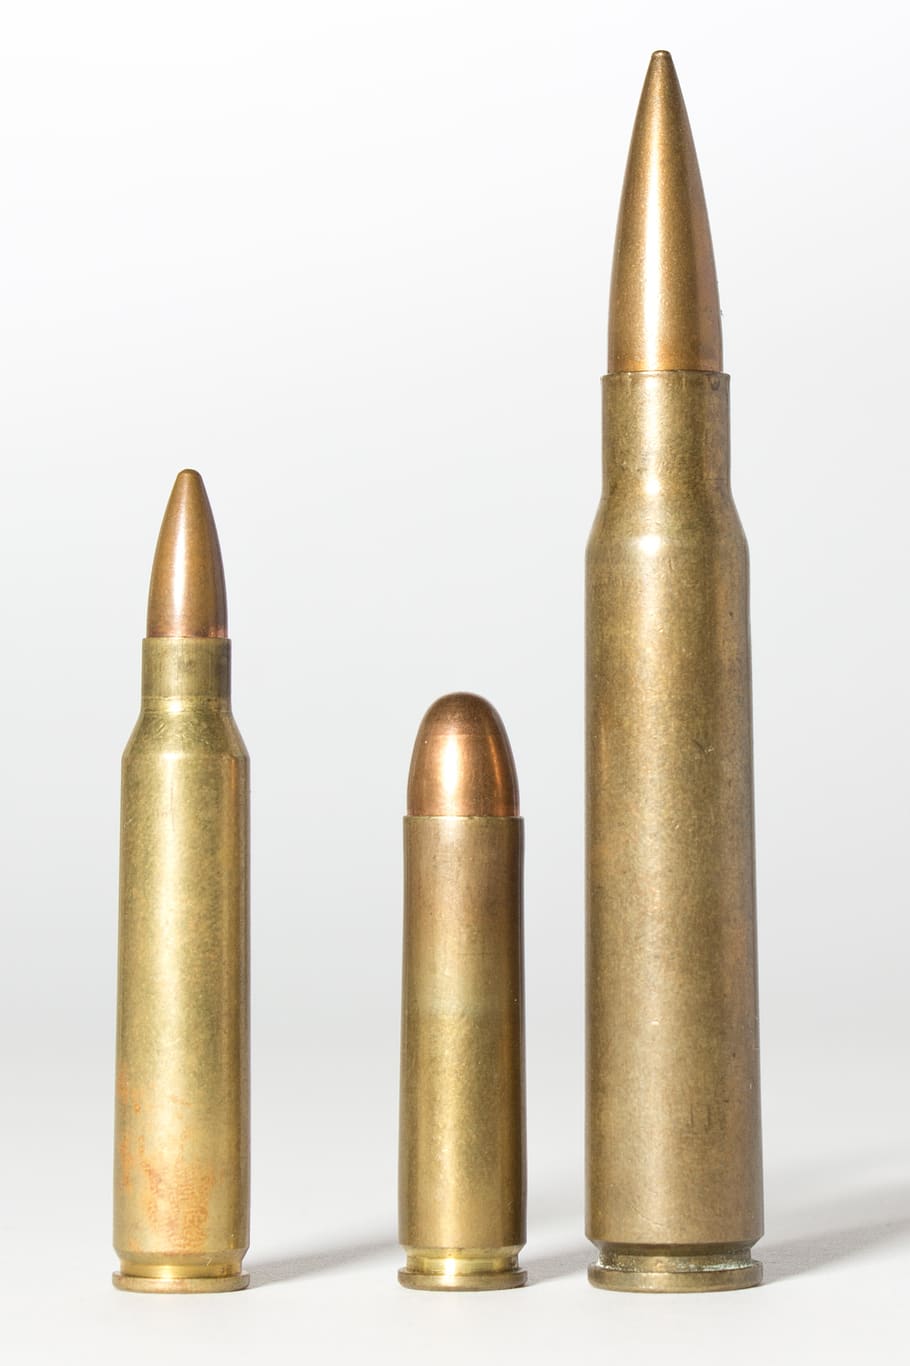 cartridges, muniiton, caliber, weapons, sleeves, pistol, floor, weapon, projectile, hand gun